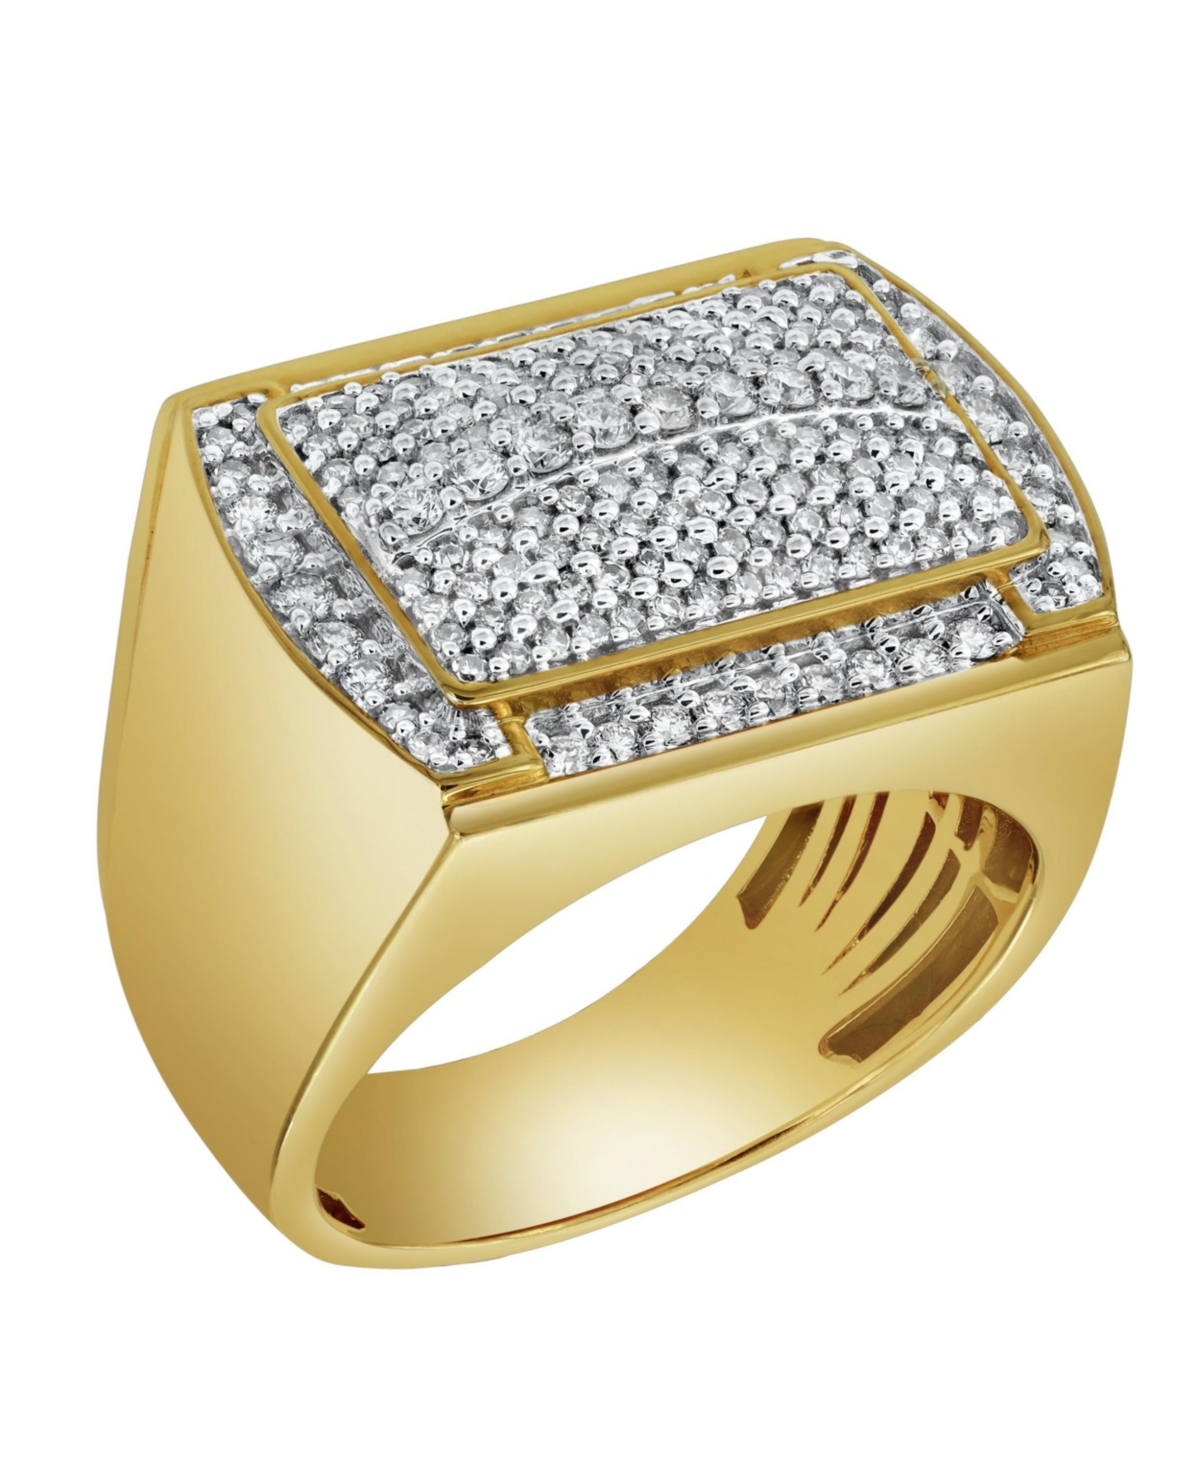 Hip Hop Headlight Natural Certified Diamond3.24 cttw Round Cut 14k Yellow Gold Statement Ring for Men - Yellow